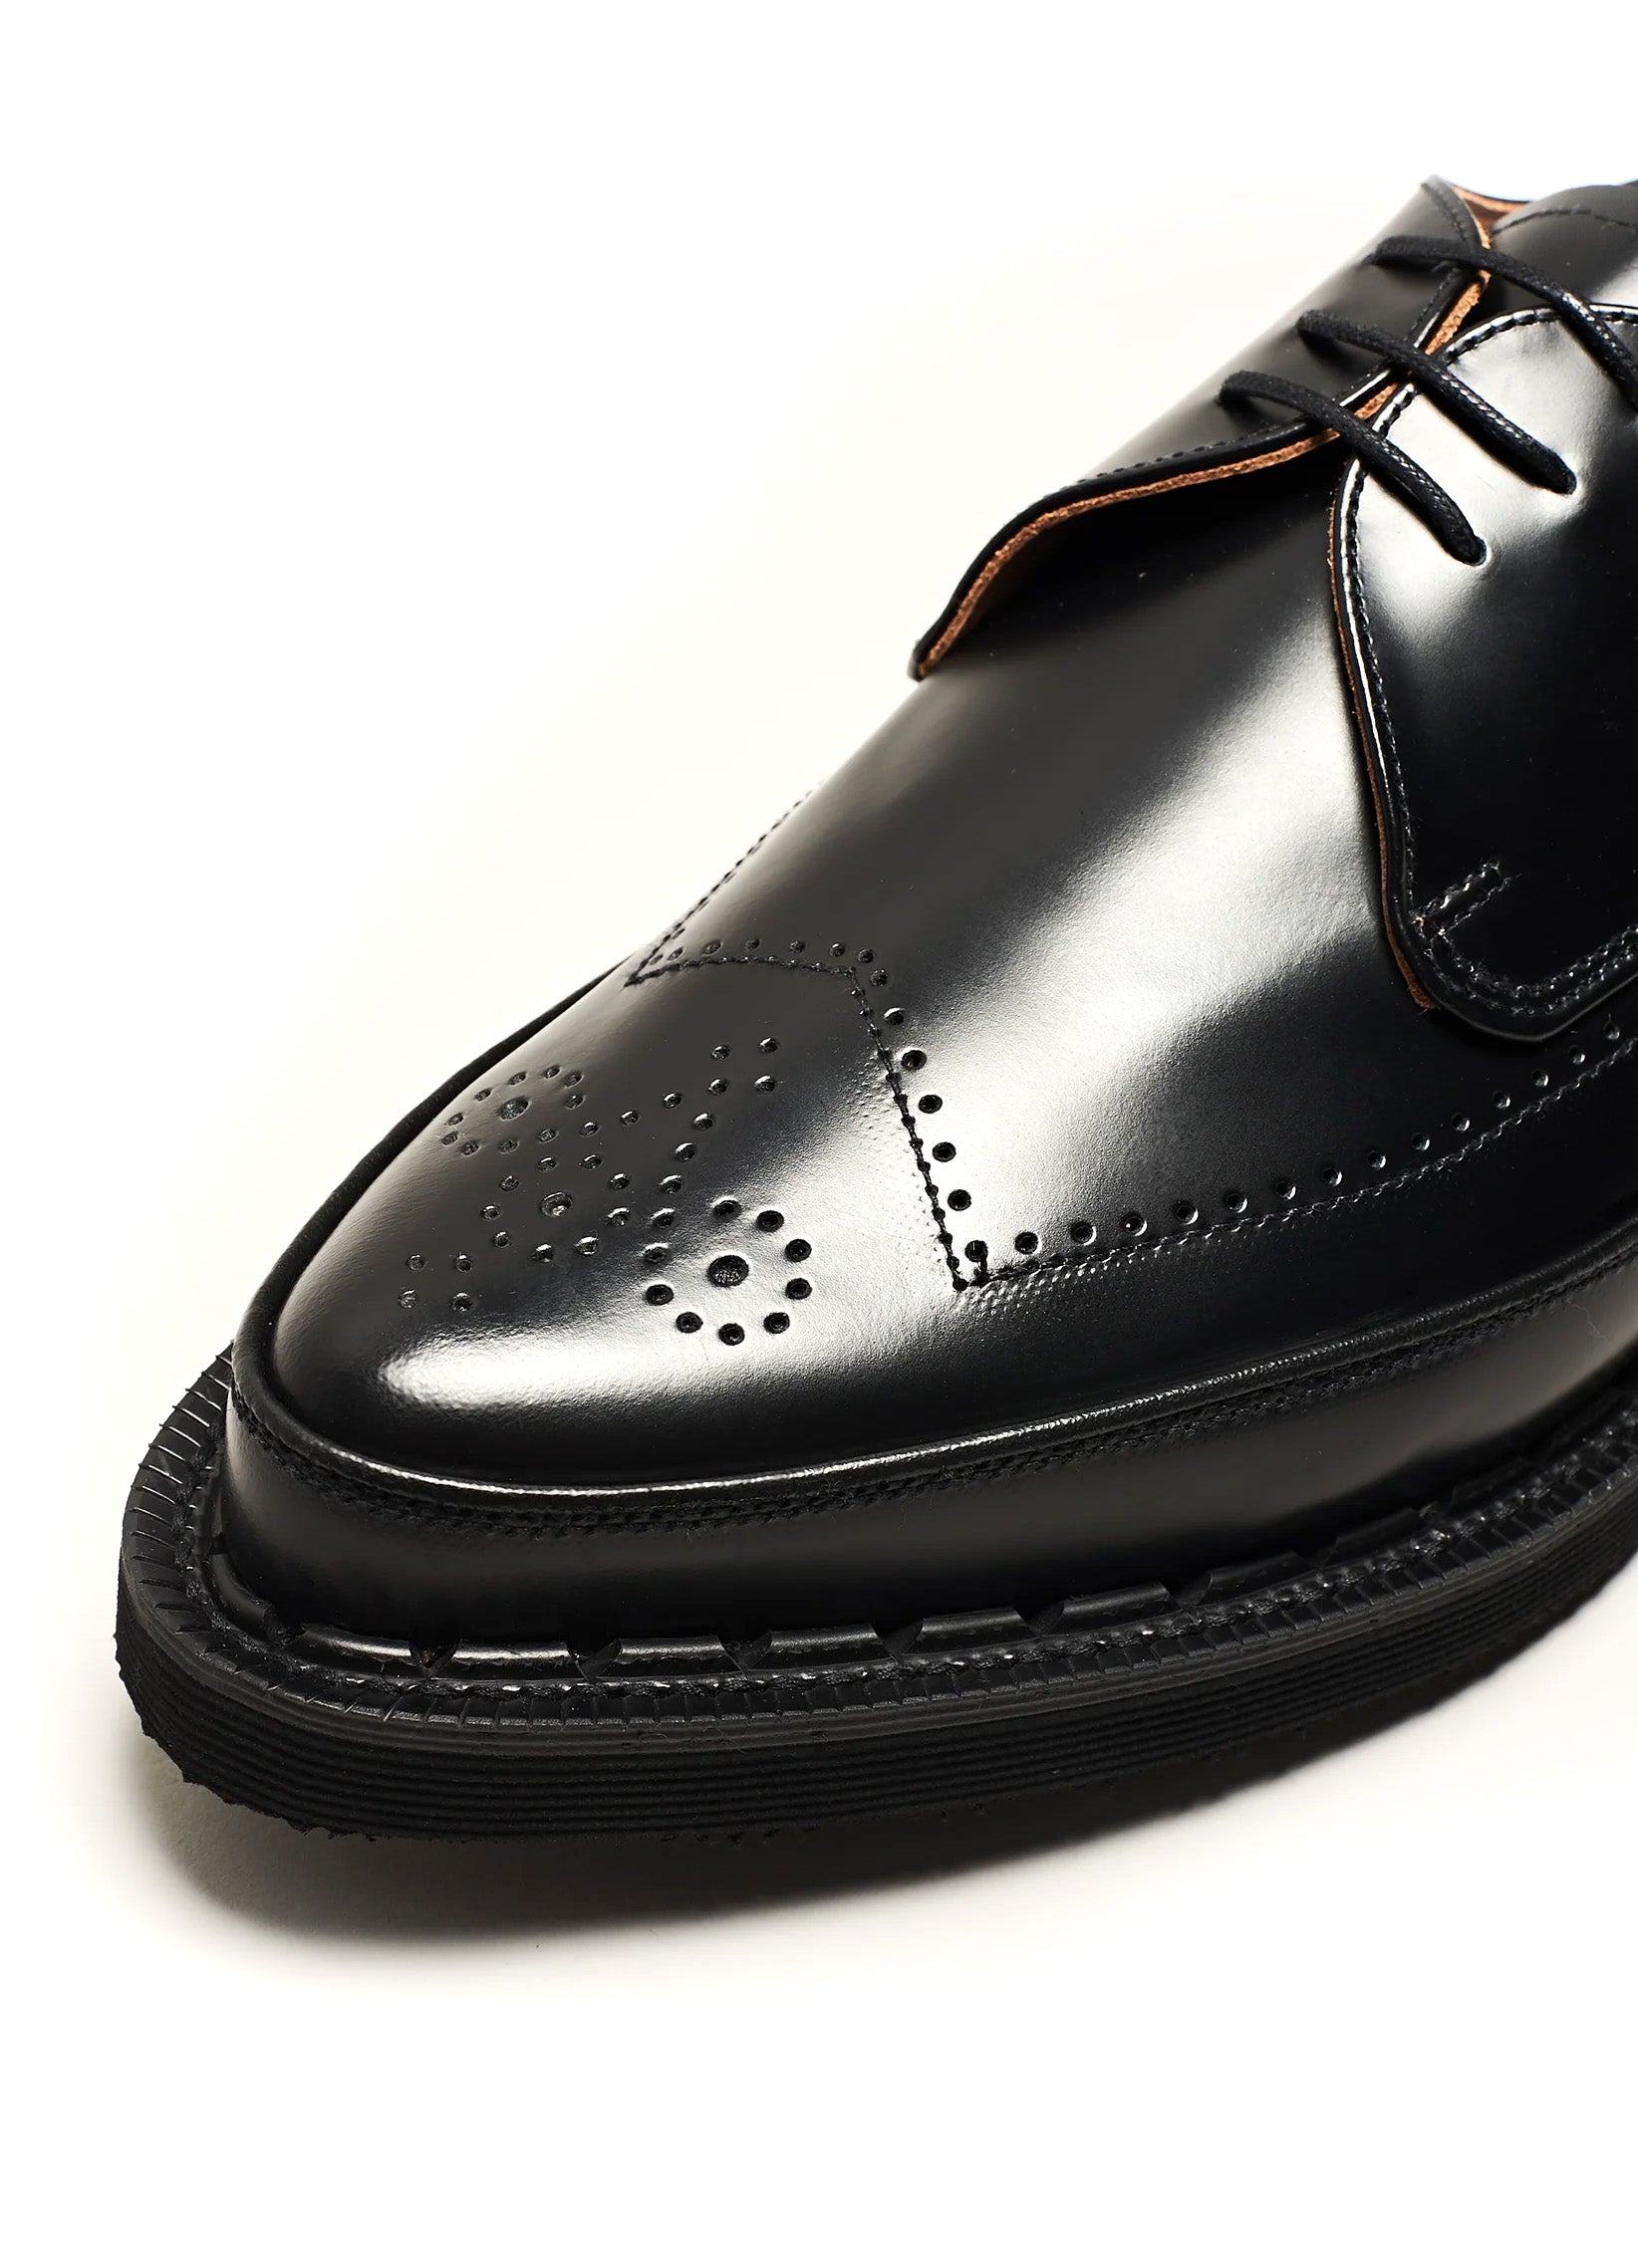 STRUMMER GIBSON | Leather Shoe | Black